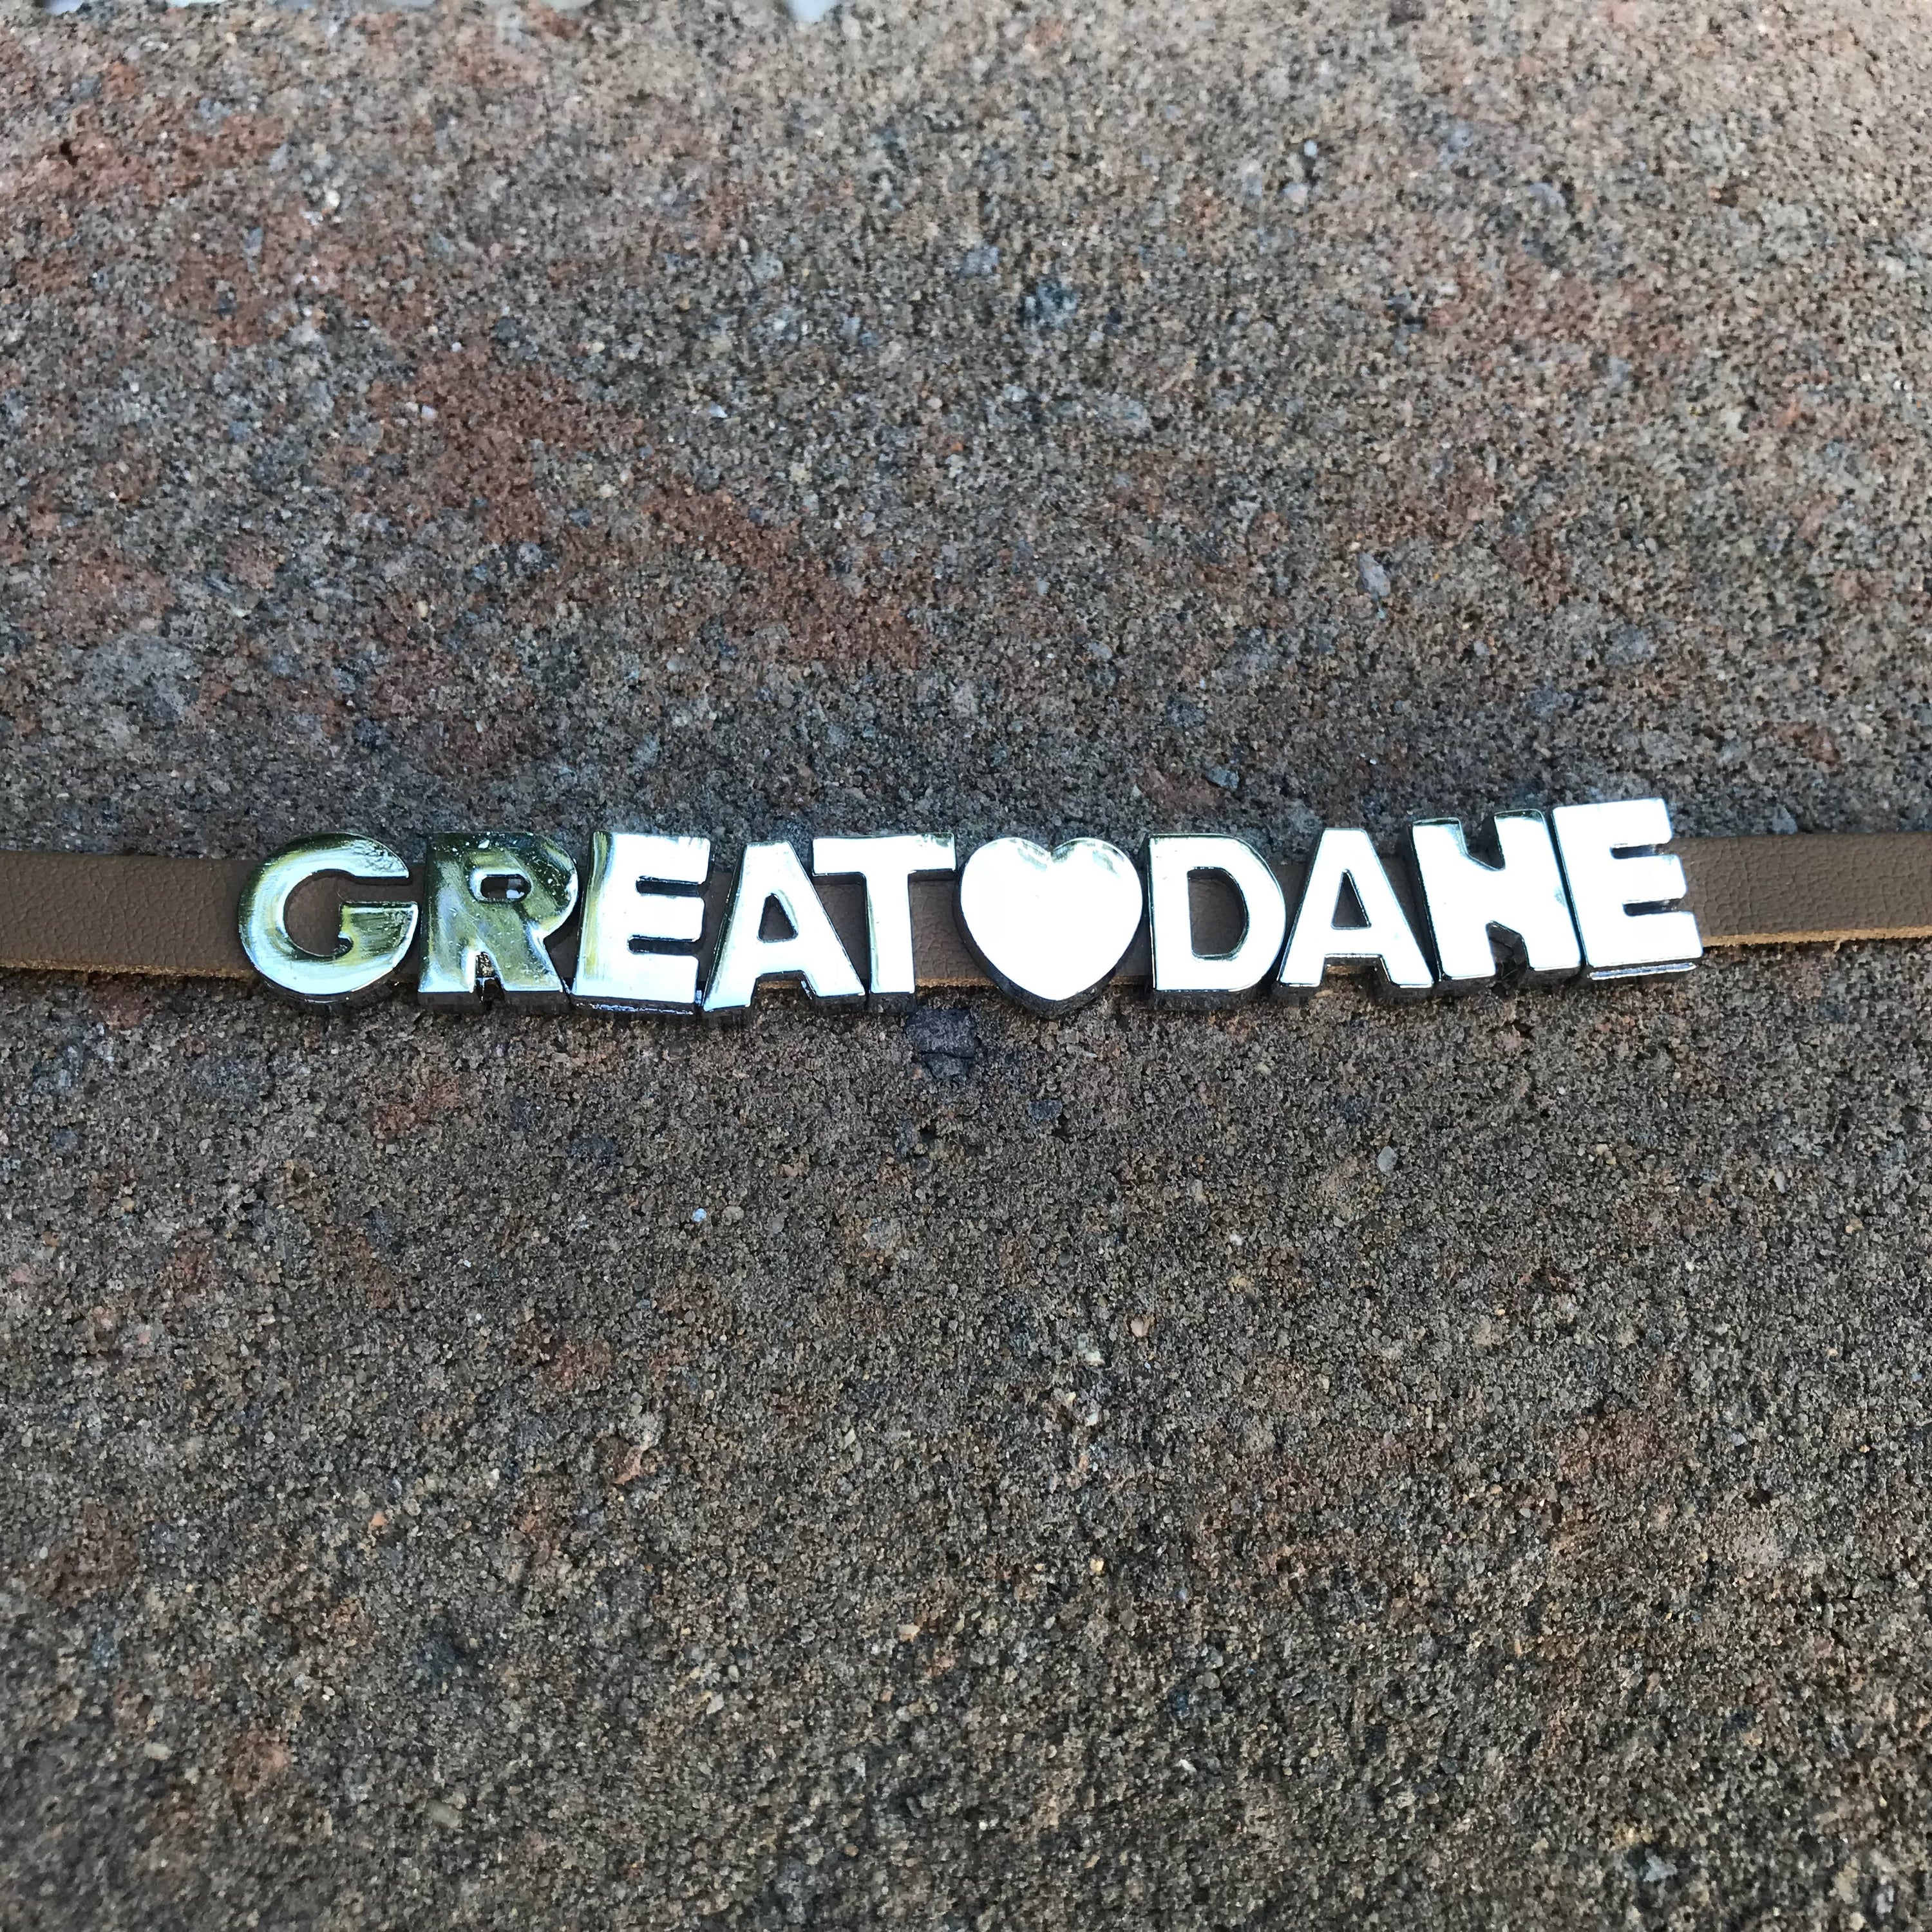 "GREAT DANE" charm/friendship bracelet - 7 inches